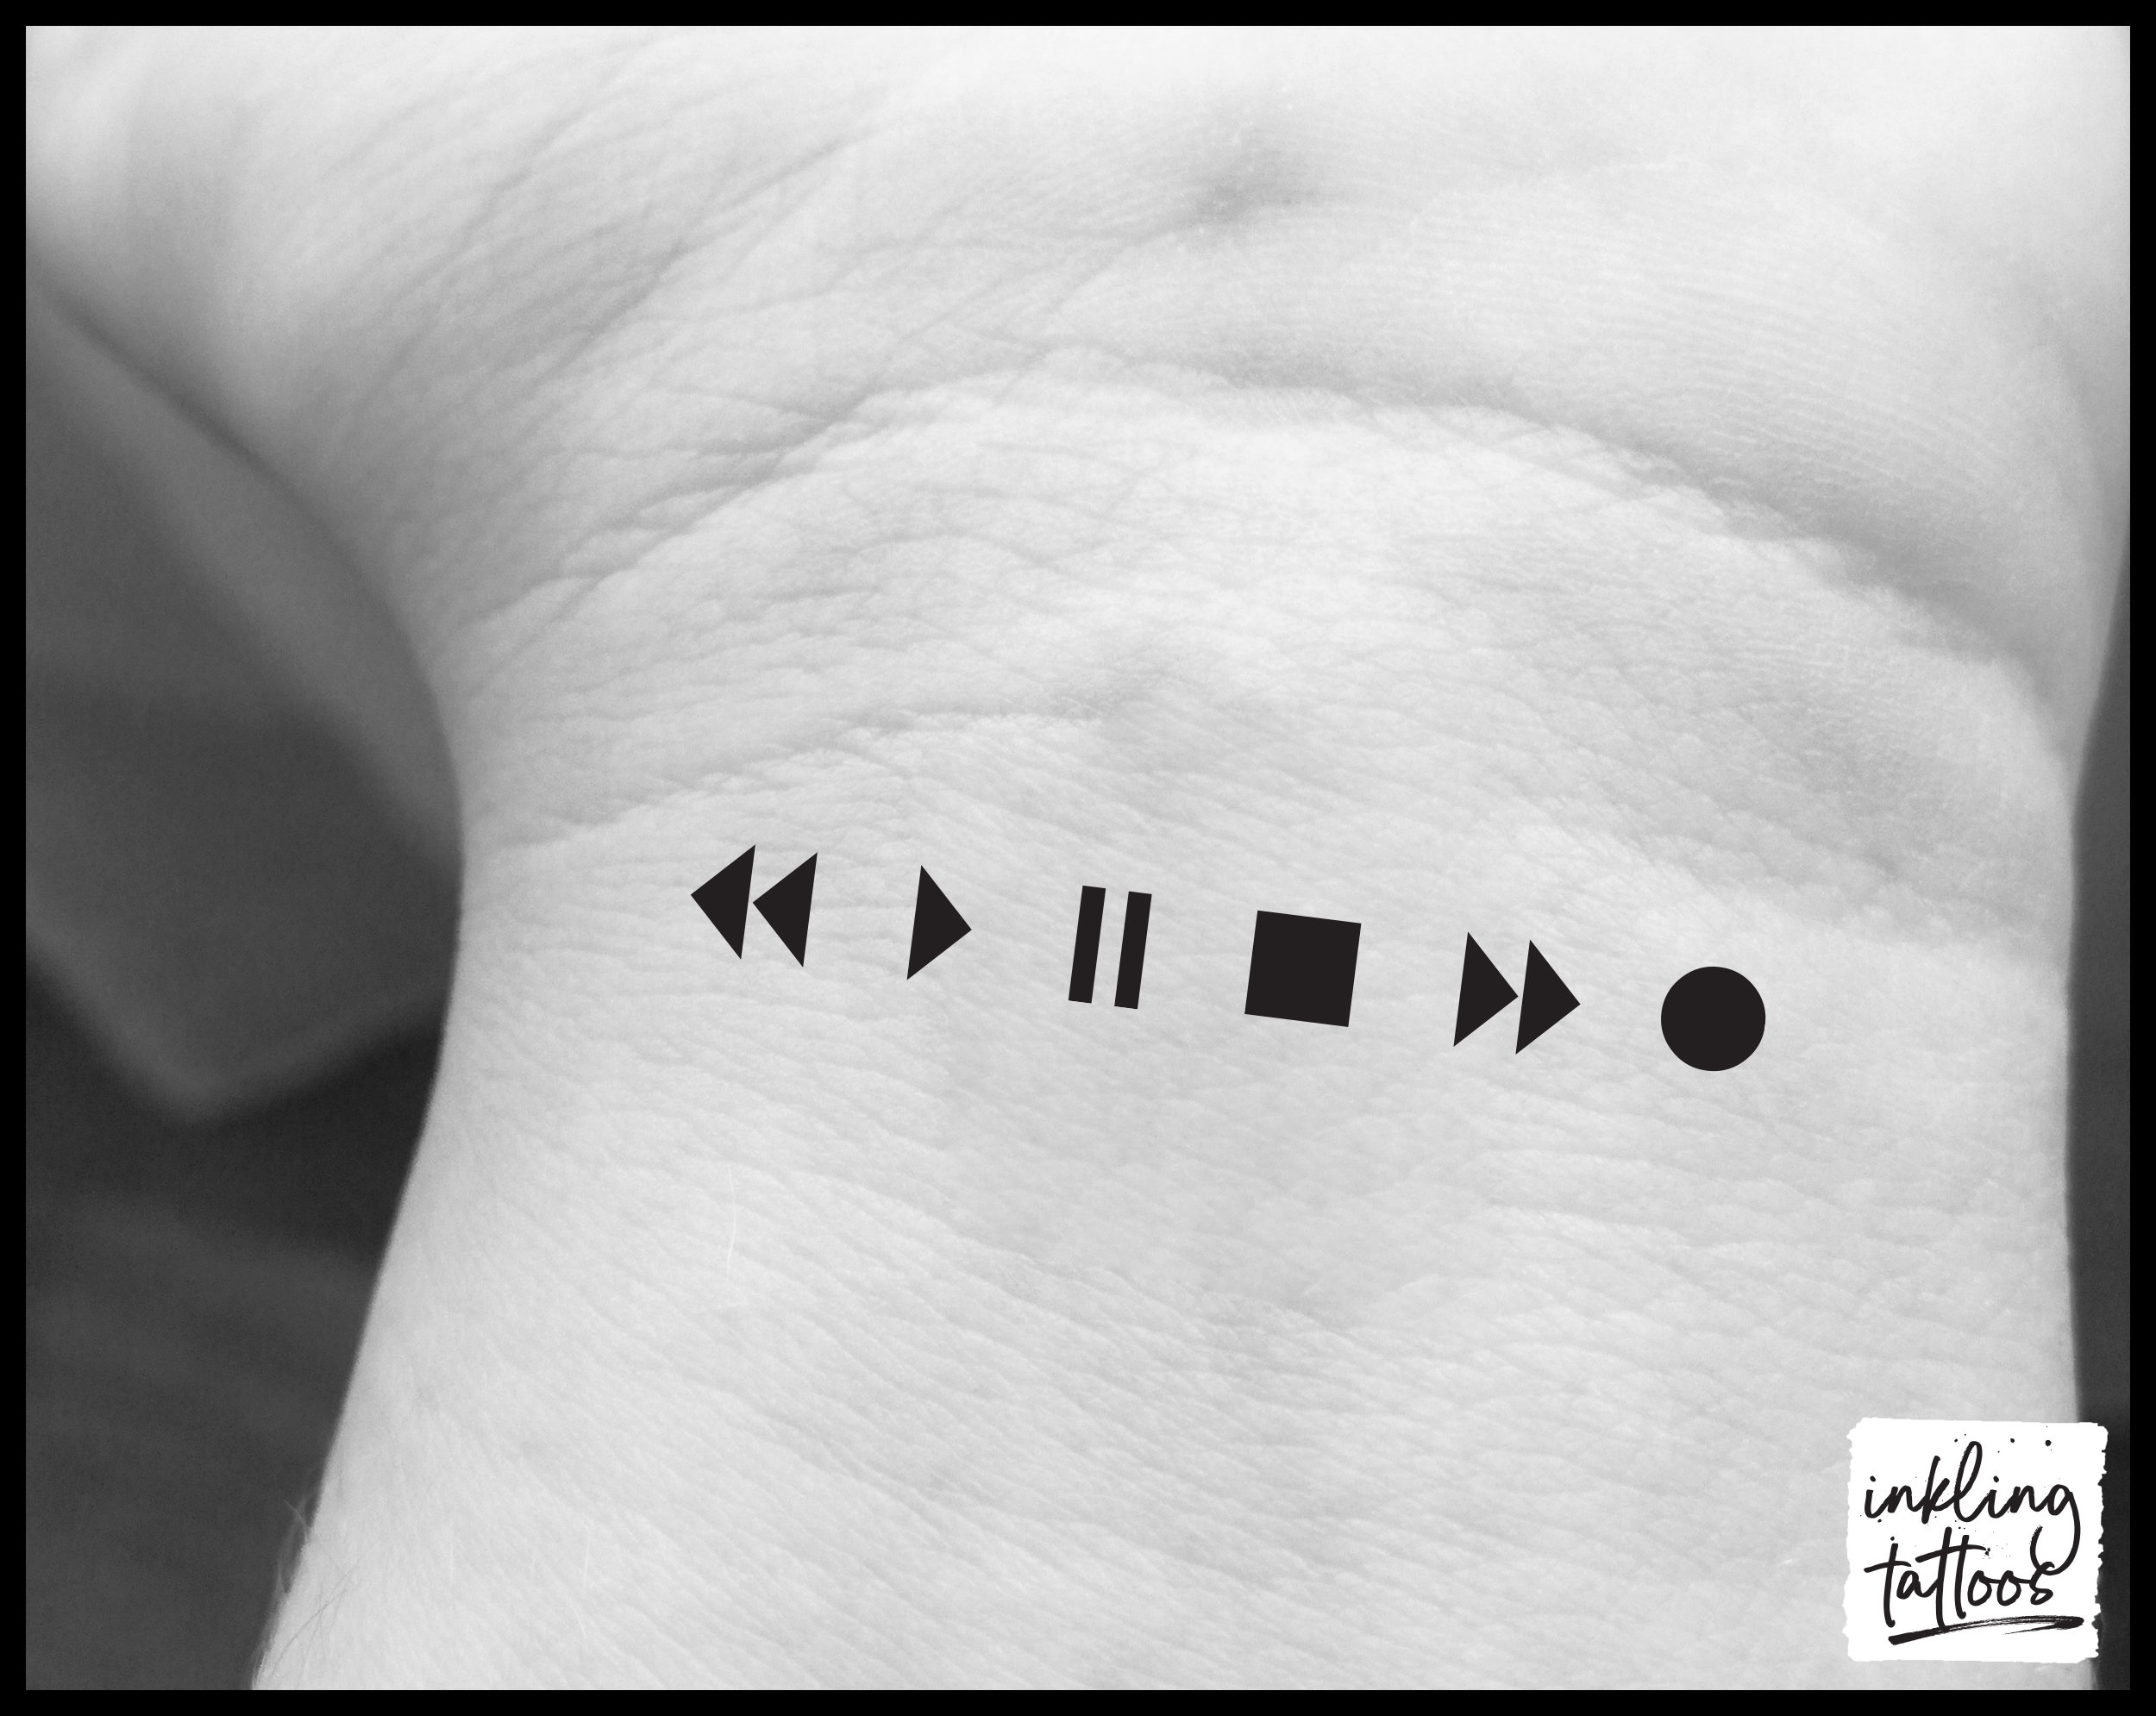 1 day old tattoo, @mijonju 's hand. Film photography zone … | Flickr